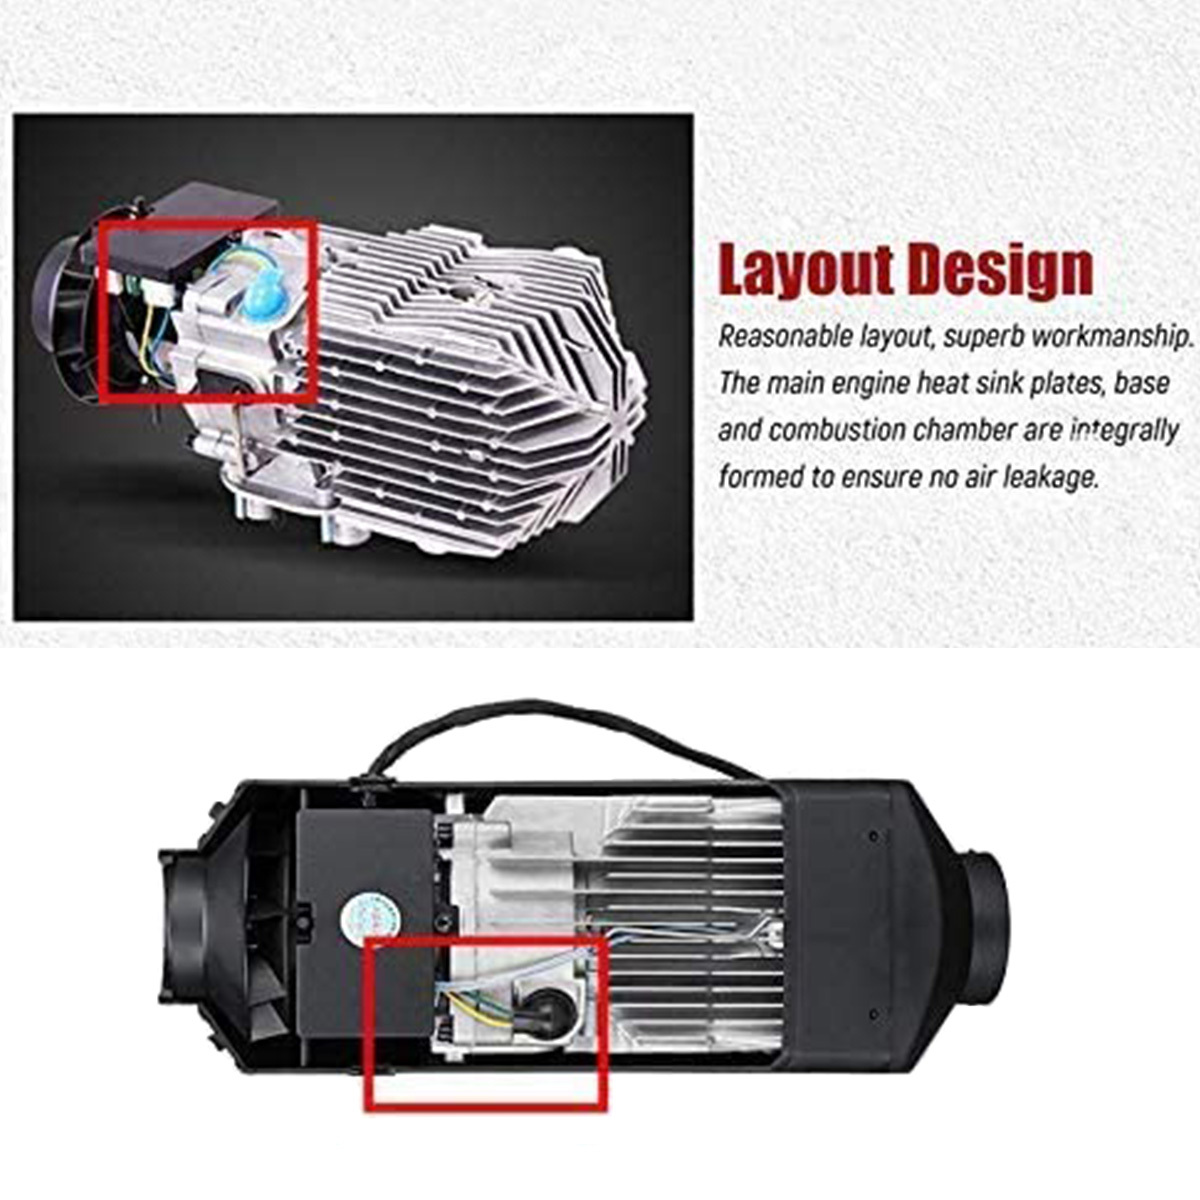 Auxiliary Heater Glow Plug, 12 V Car Air Heating Glow Plug Repair